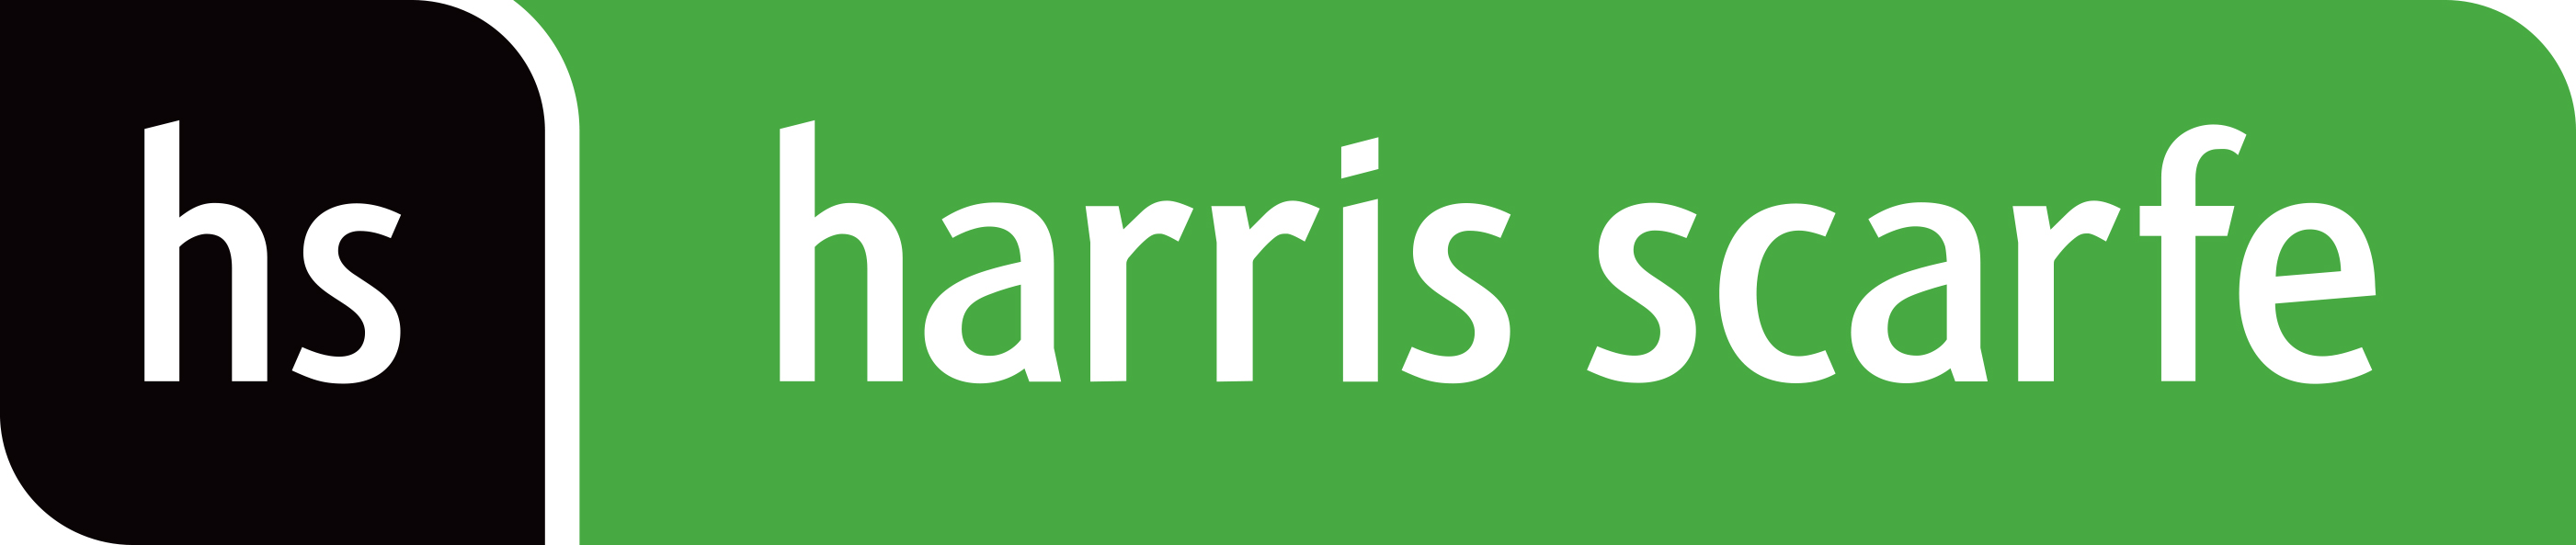 Harris Scarfe Frankston - Harris Scarfe Careers